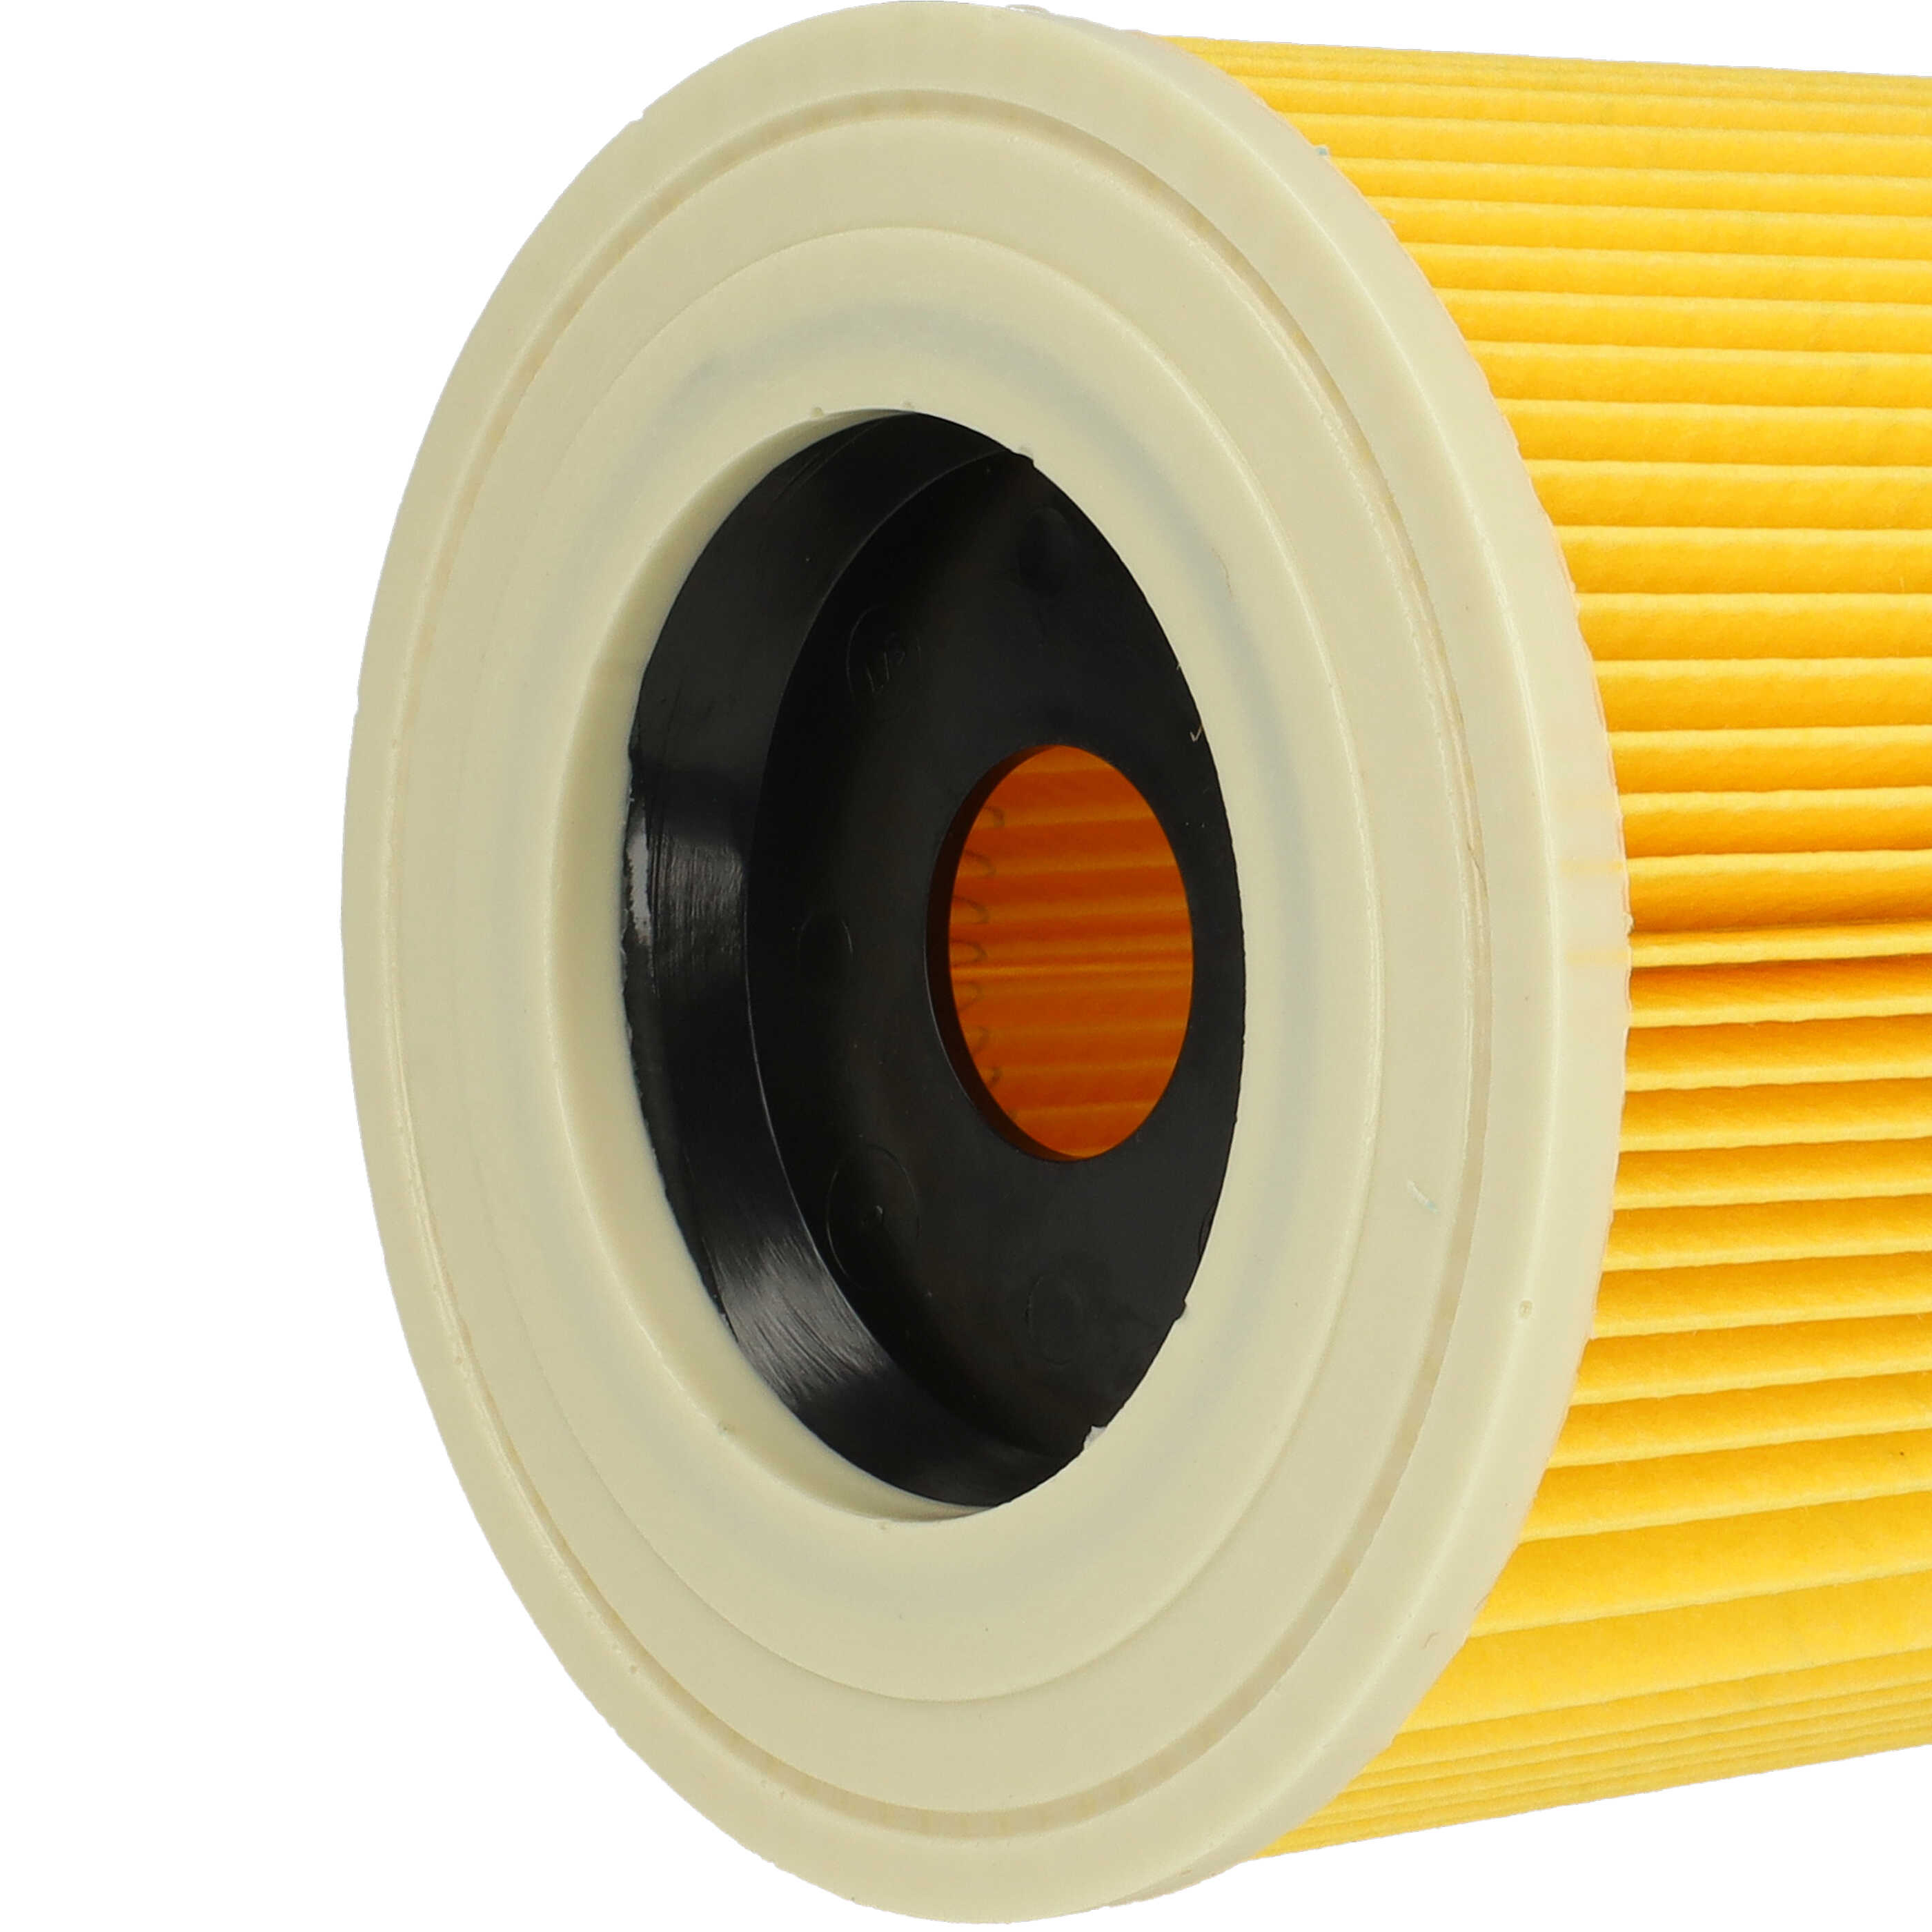 10x cartridge filter replaces Kärcher 2.863-303.0, 6.414-547.0 for PowerPlusVacuum Cleaner, yellow